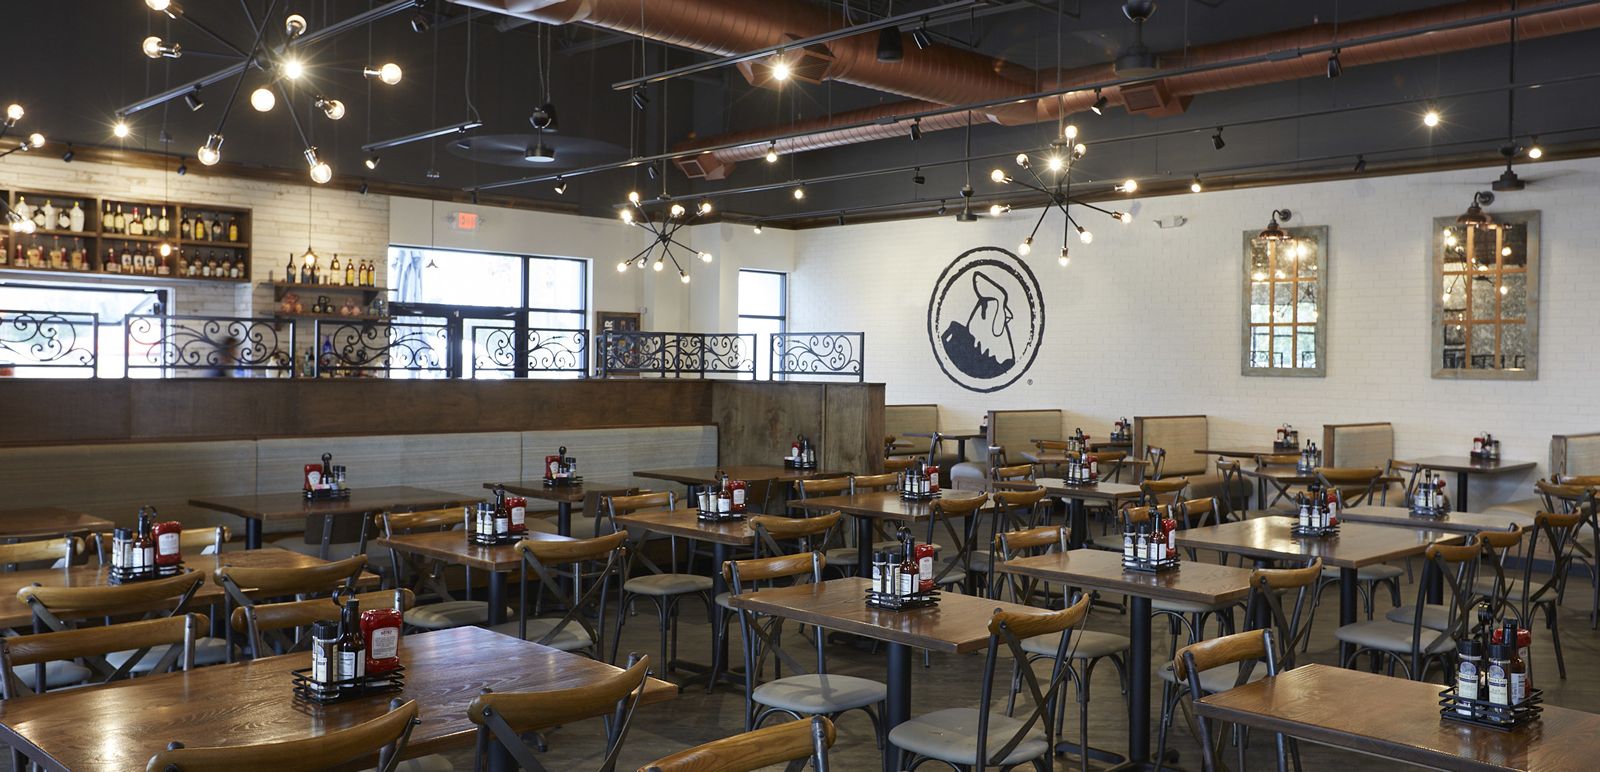 Another Broken Egg Cafe Debuts a New Look at Three Atlanta Locations